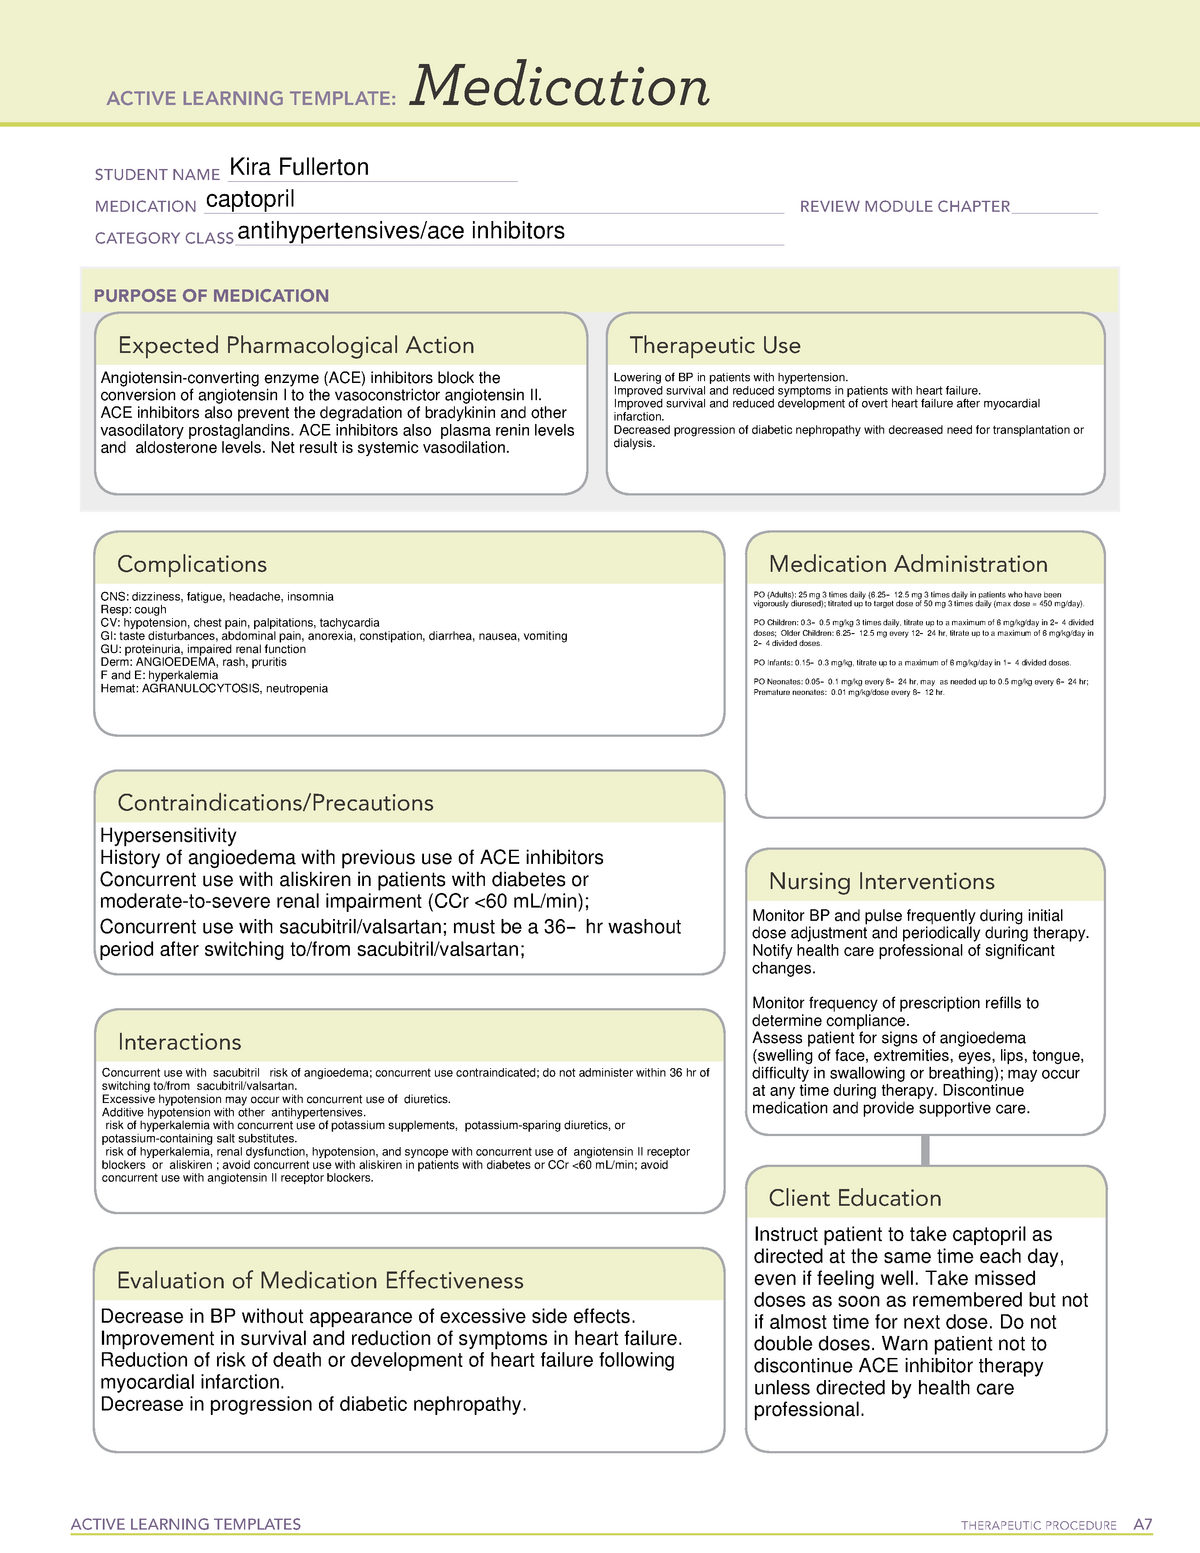 MED Captopril ATI medications sheet ACTIVE LEARNING TEMPLATES